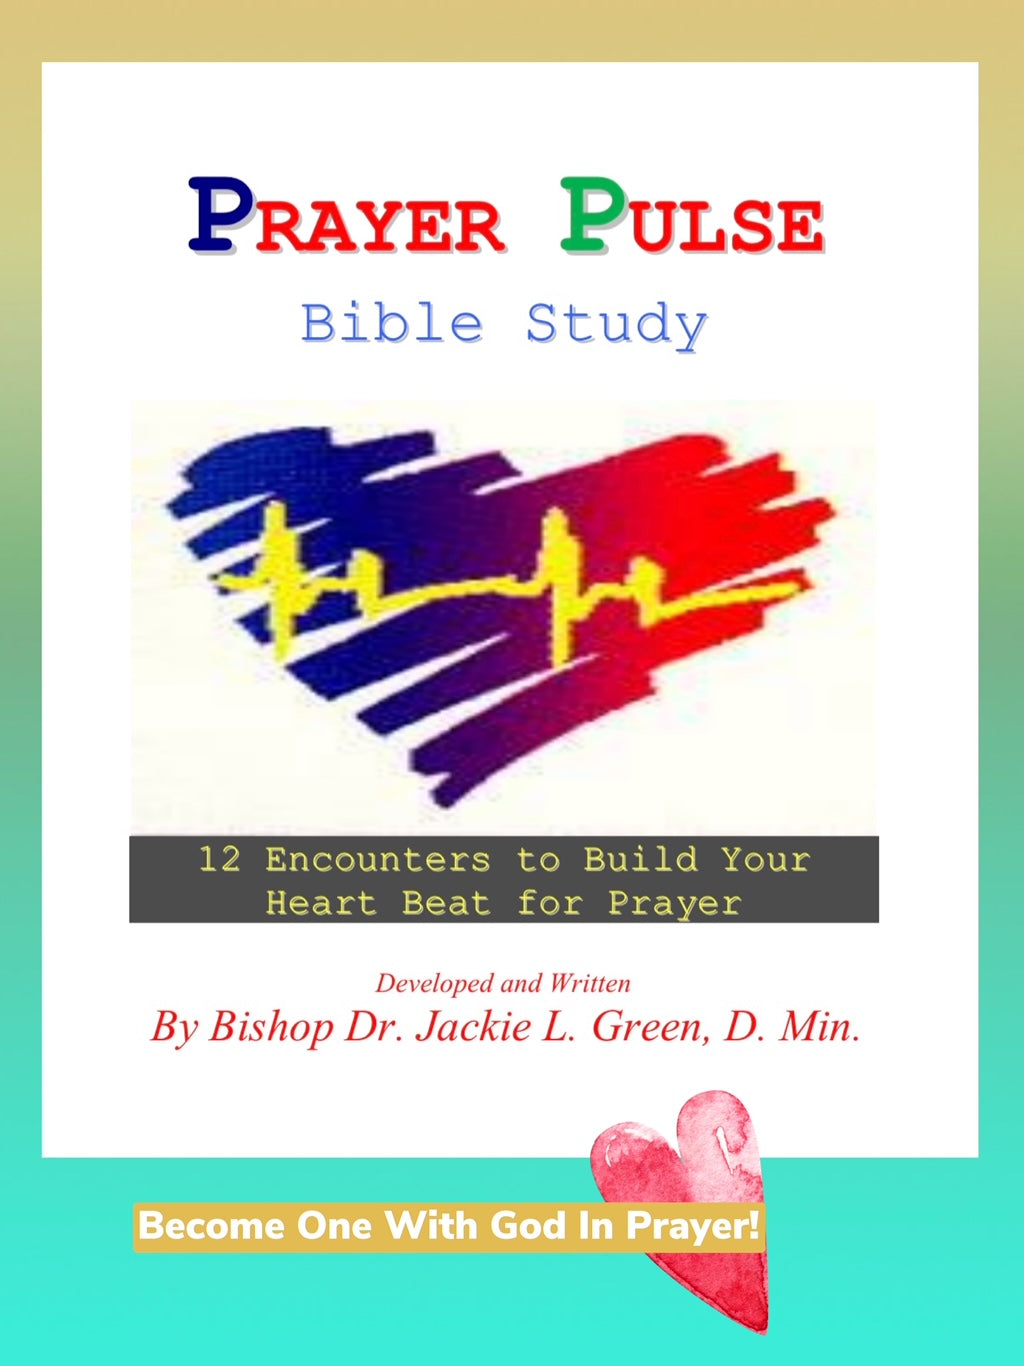 PRAYER PULSE BIBLE